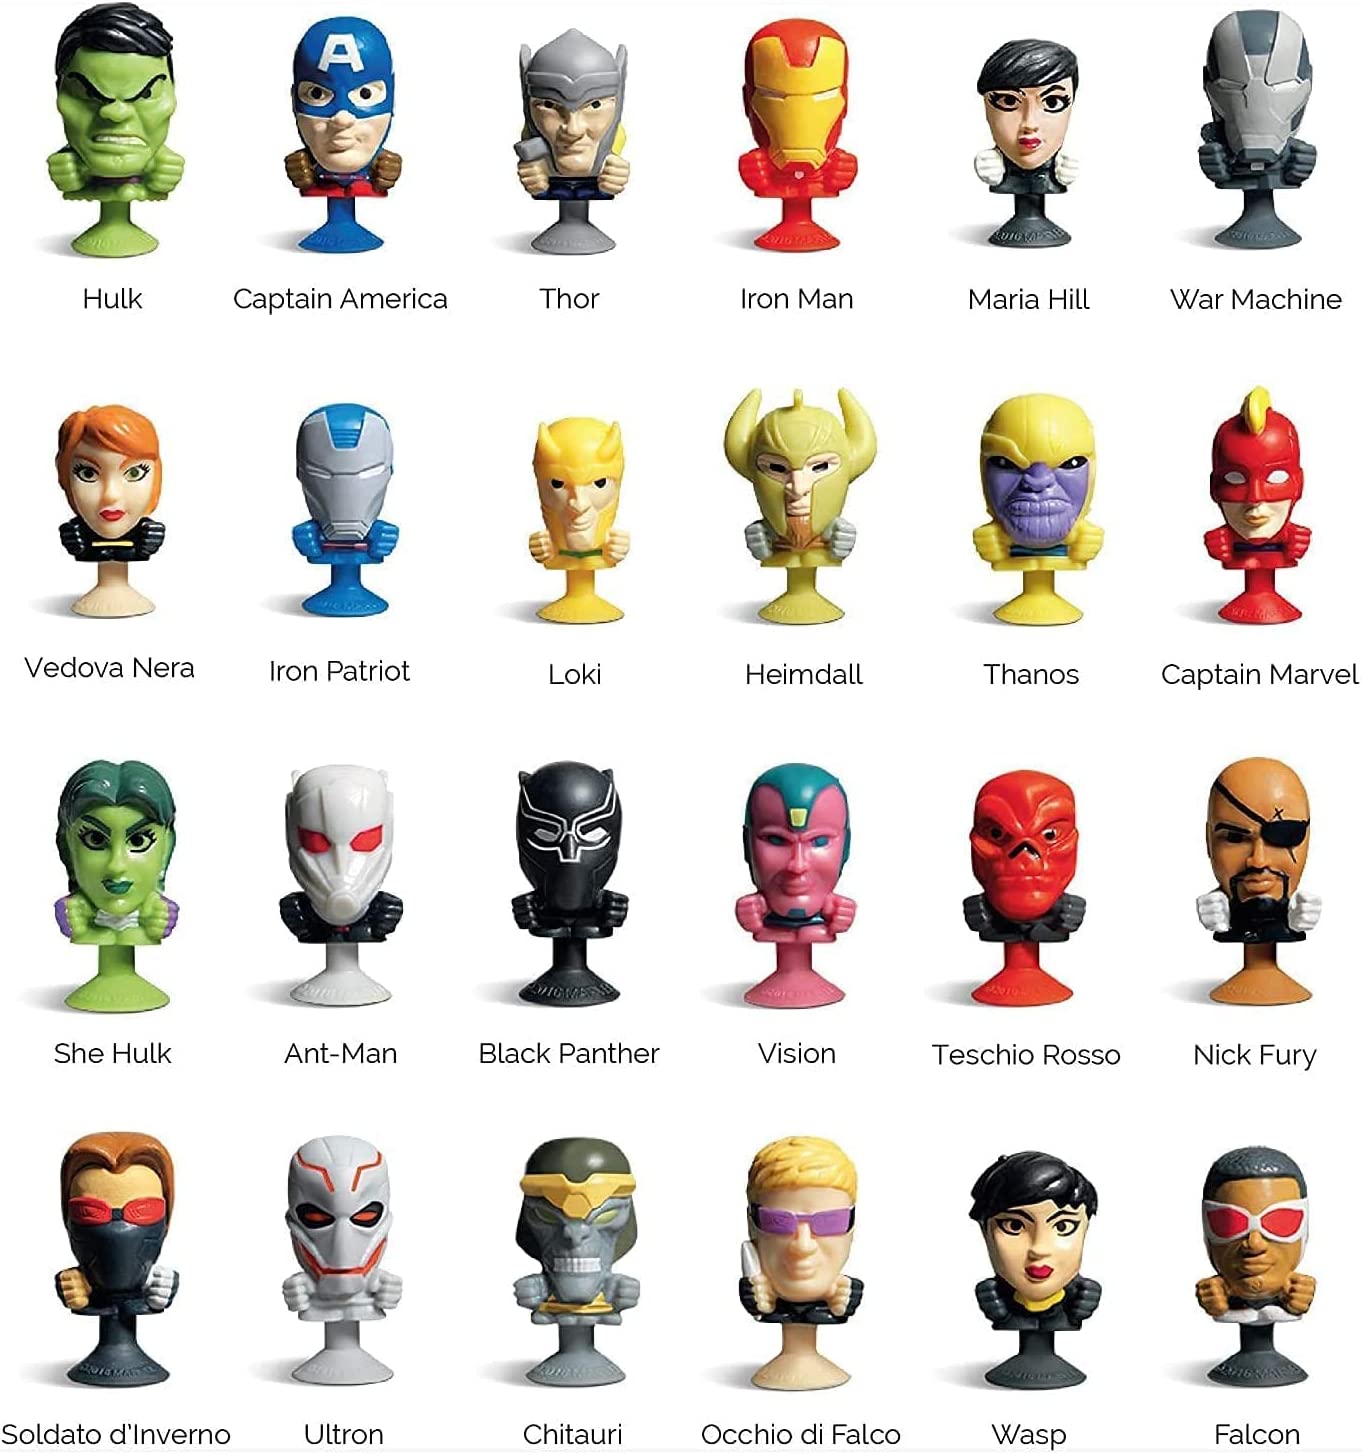 Marvel Avengers Megapopz Party Favours Collectable Figure Heads CDU of 144 Megapopz - Toptoys2u